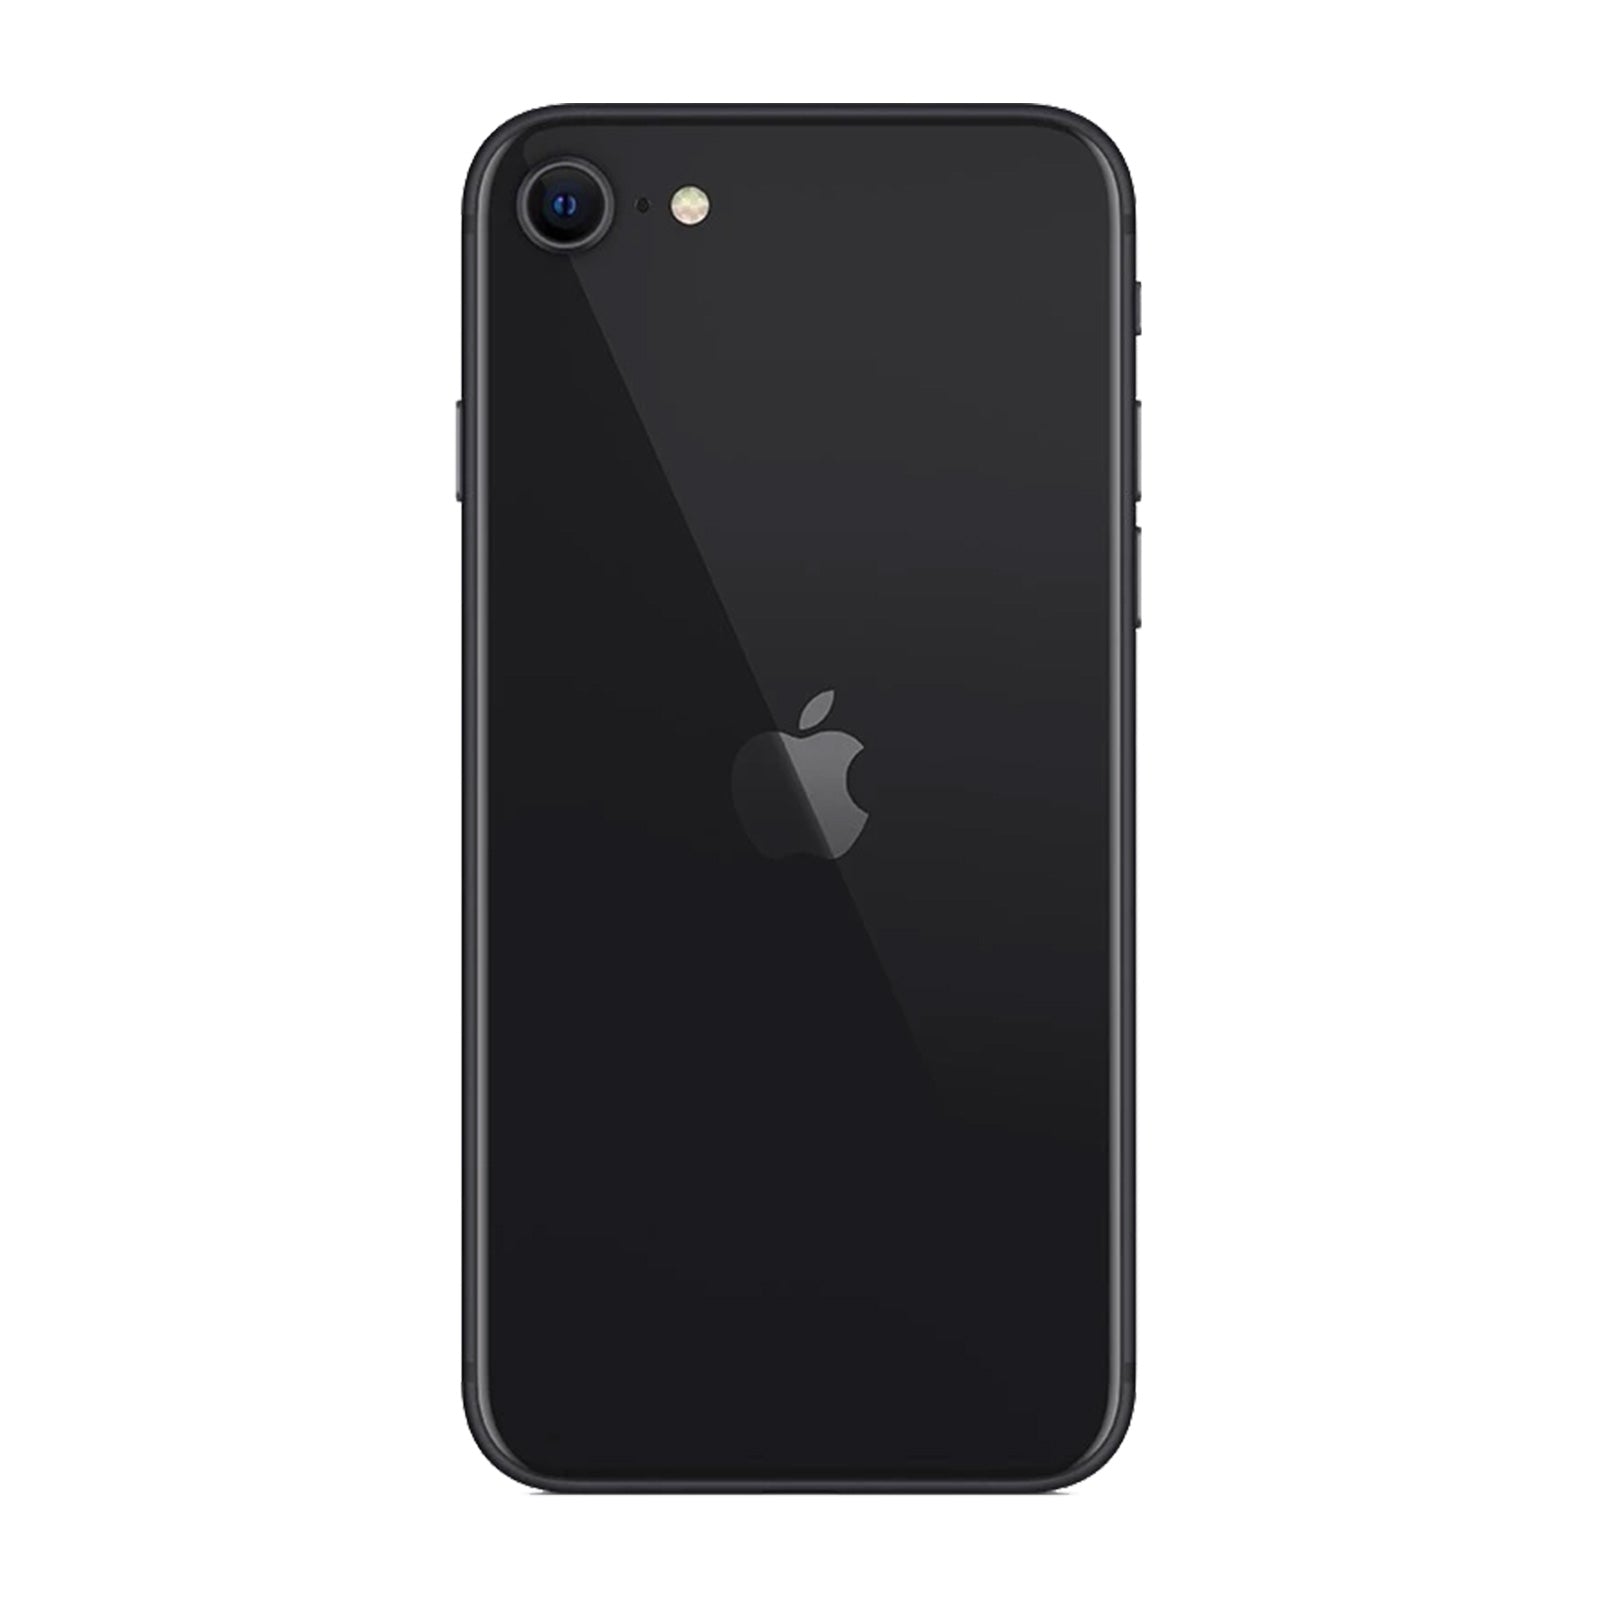 Apple iPhone SE 2nd Gen 64GB Black Good AT&T